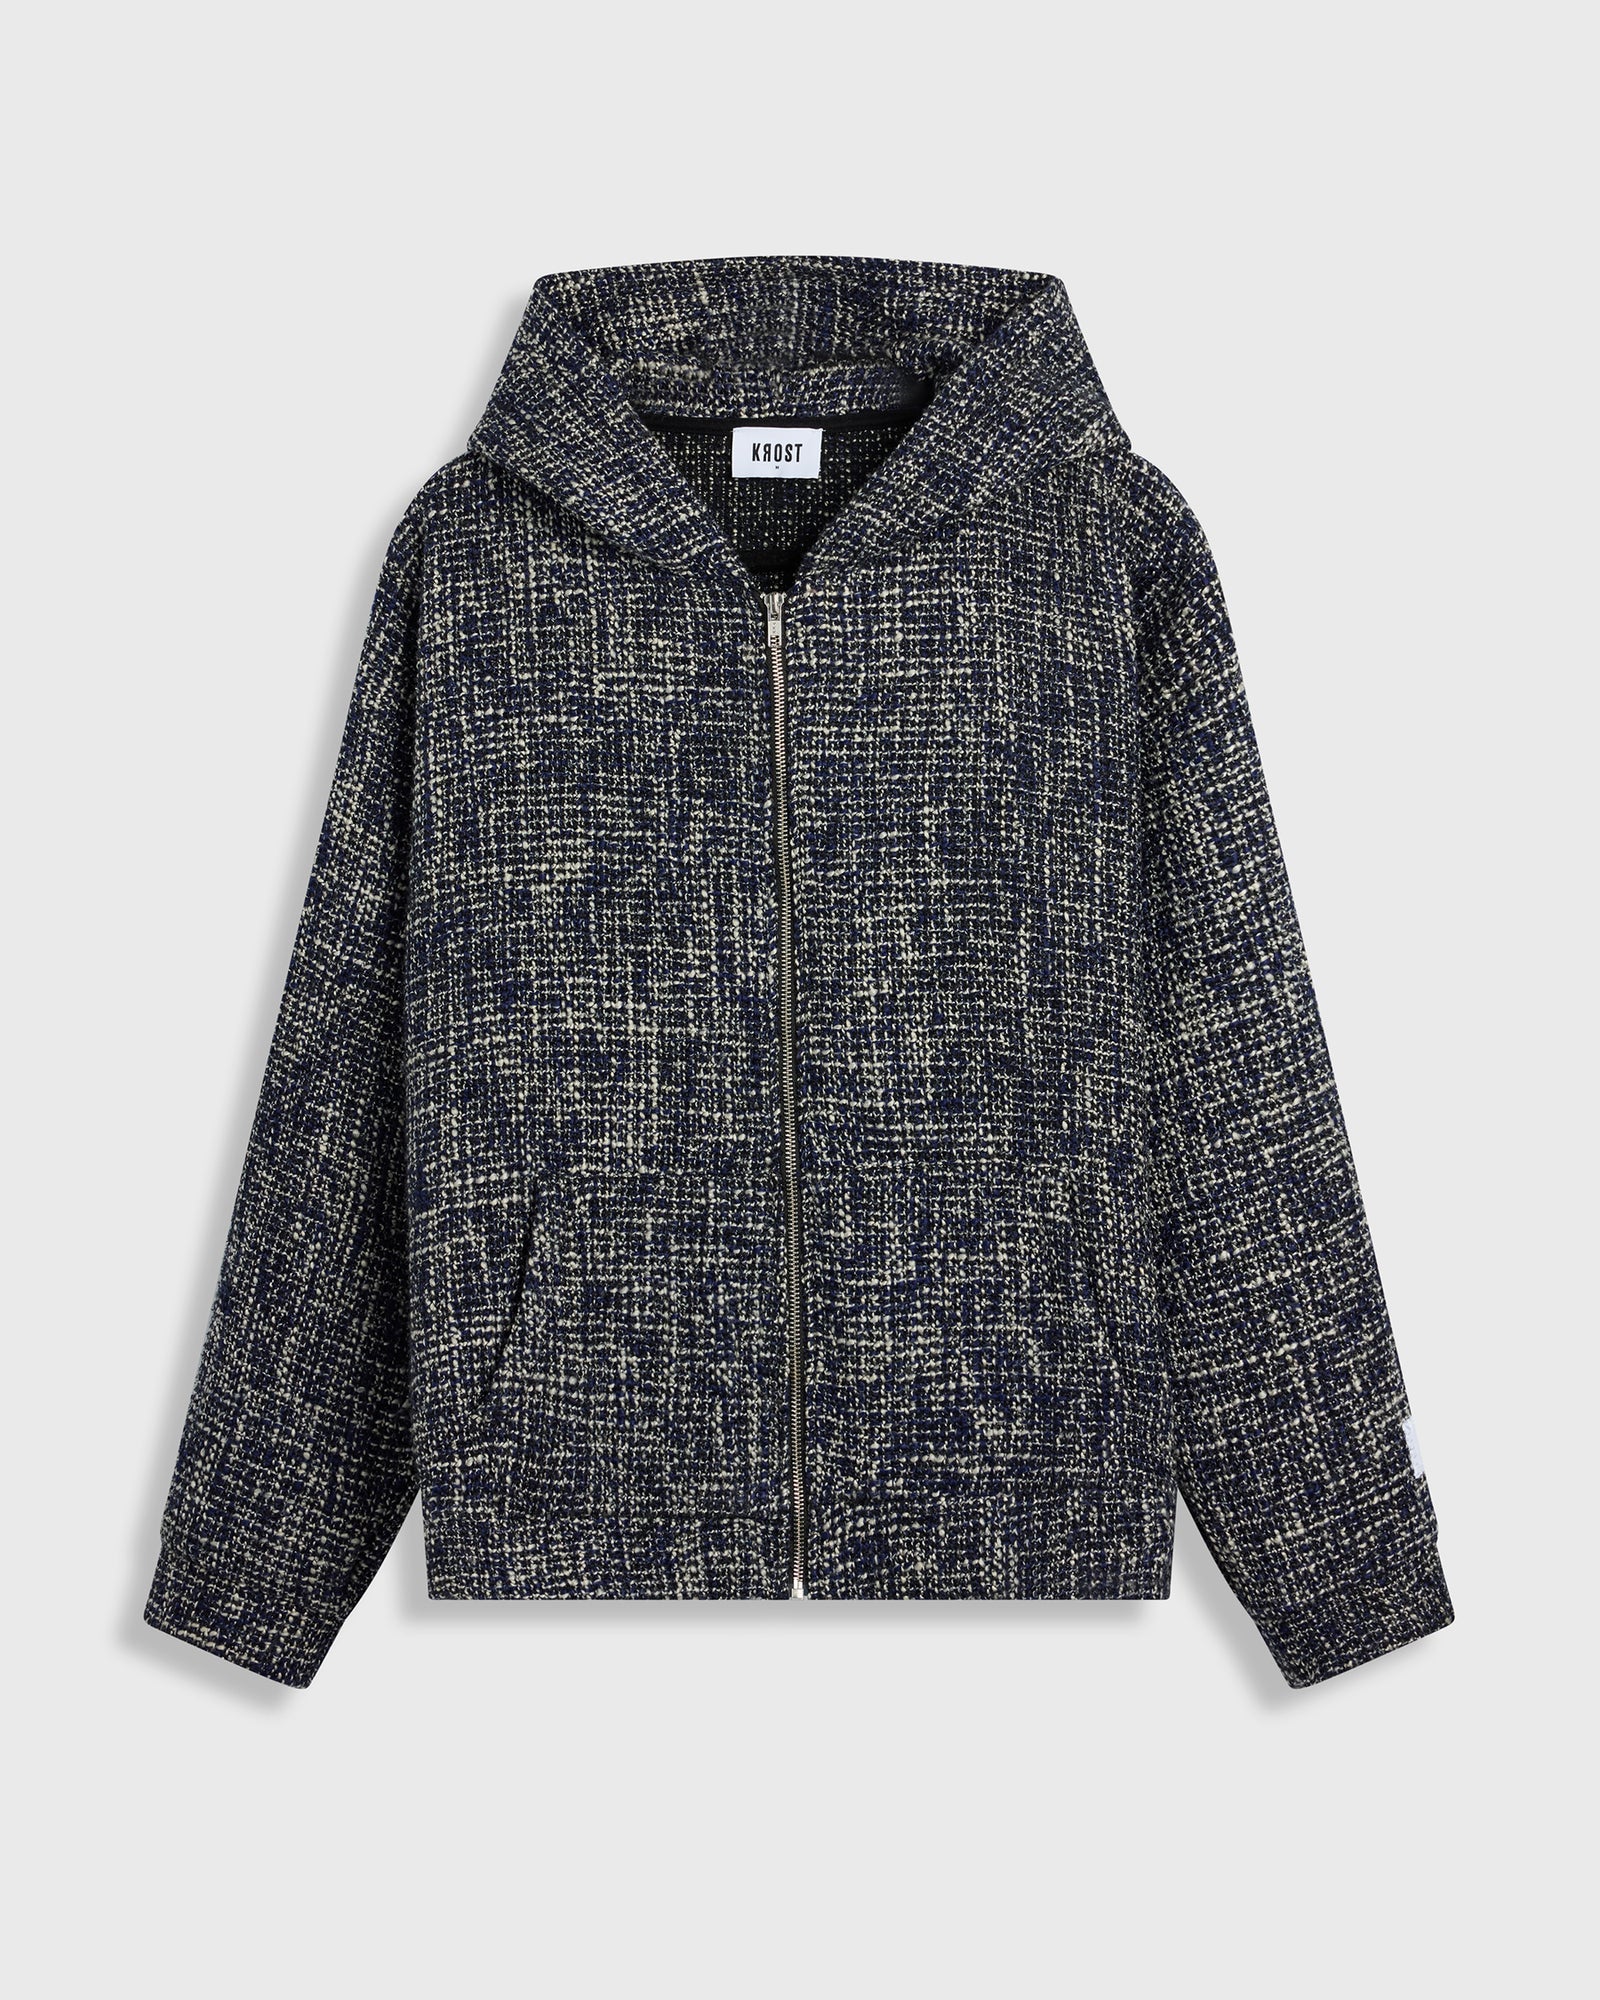 Navy tweed full zip up hoodie jacket - unisex fashion jackets for men & women by Krost